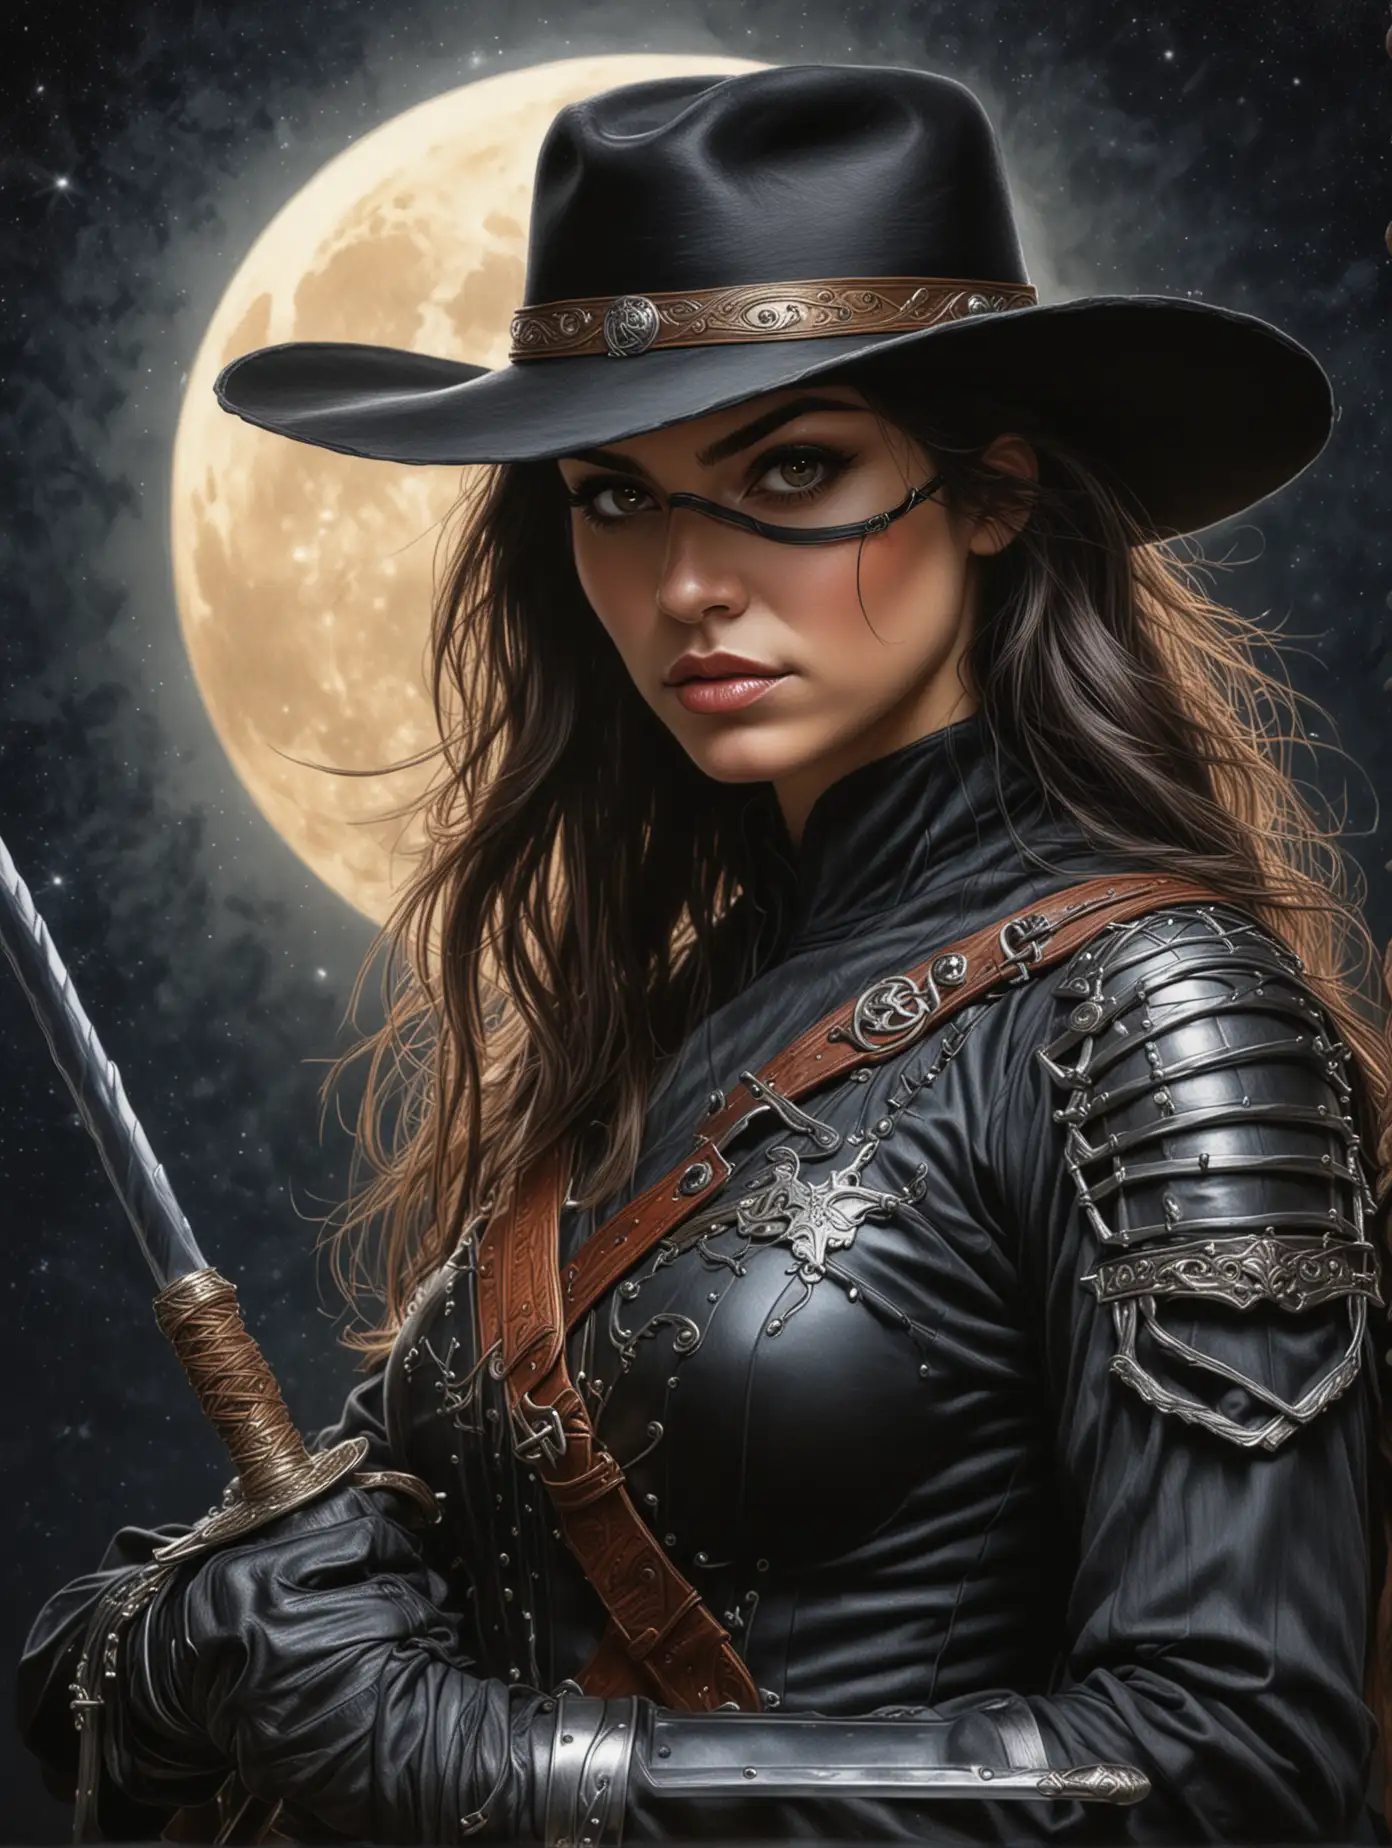 Fantasy-Cosplay-Art-American-Female-as-Zorro-with-Fencing-Sword